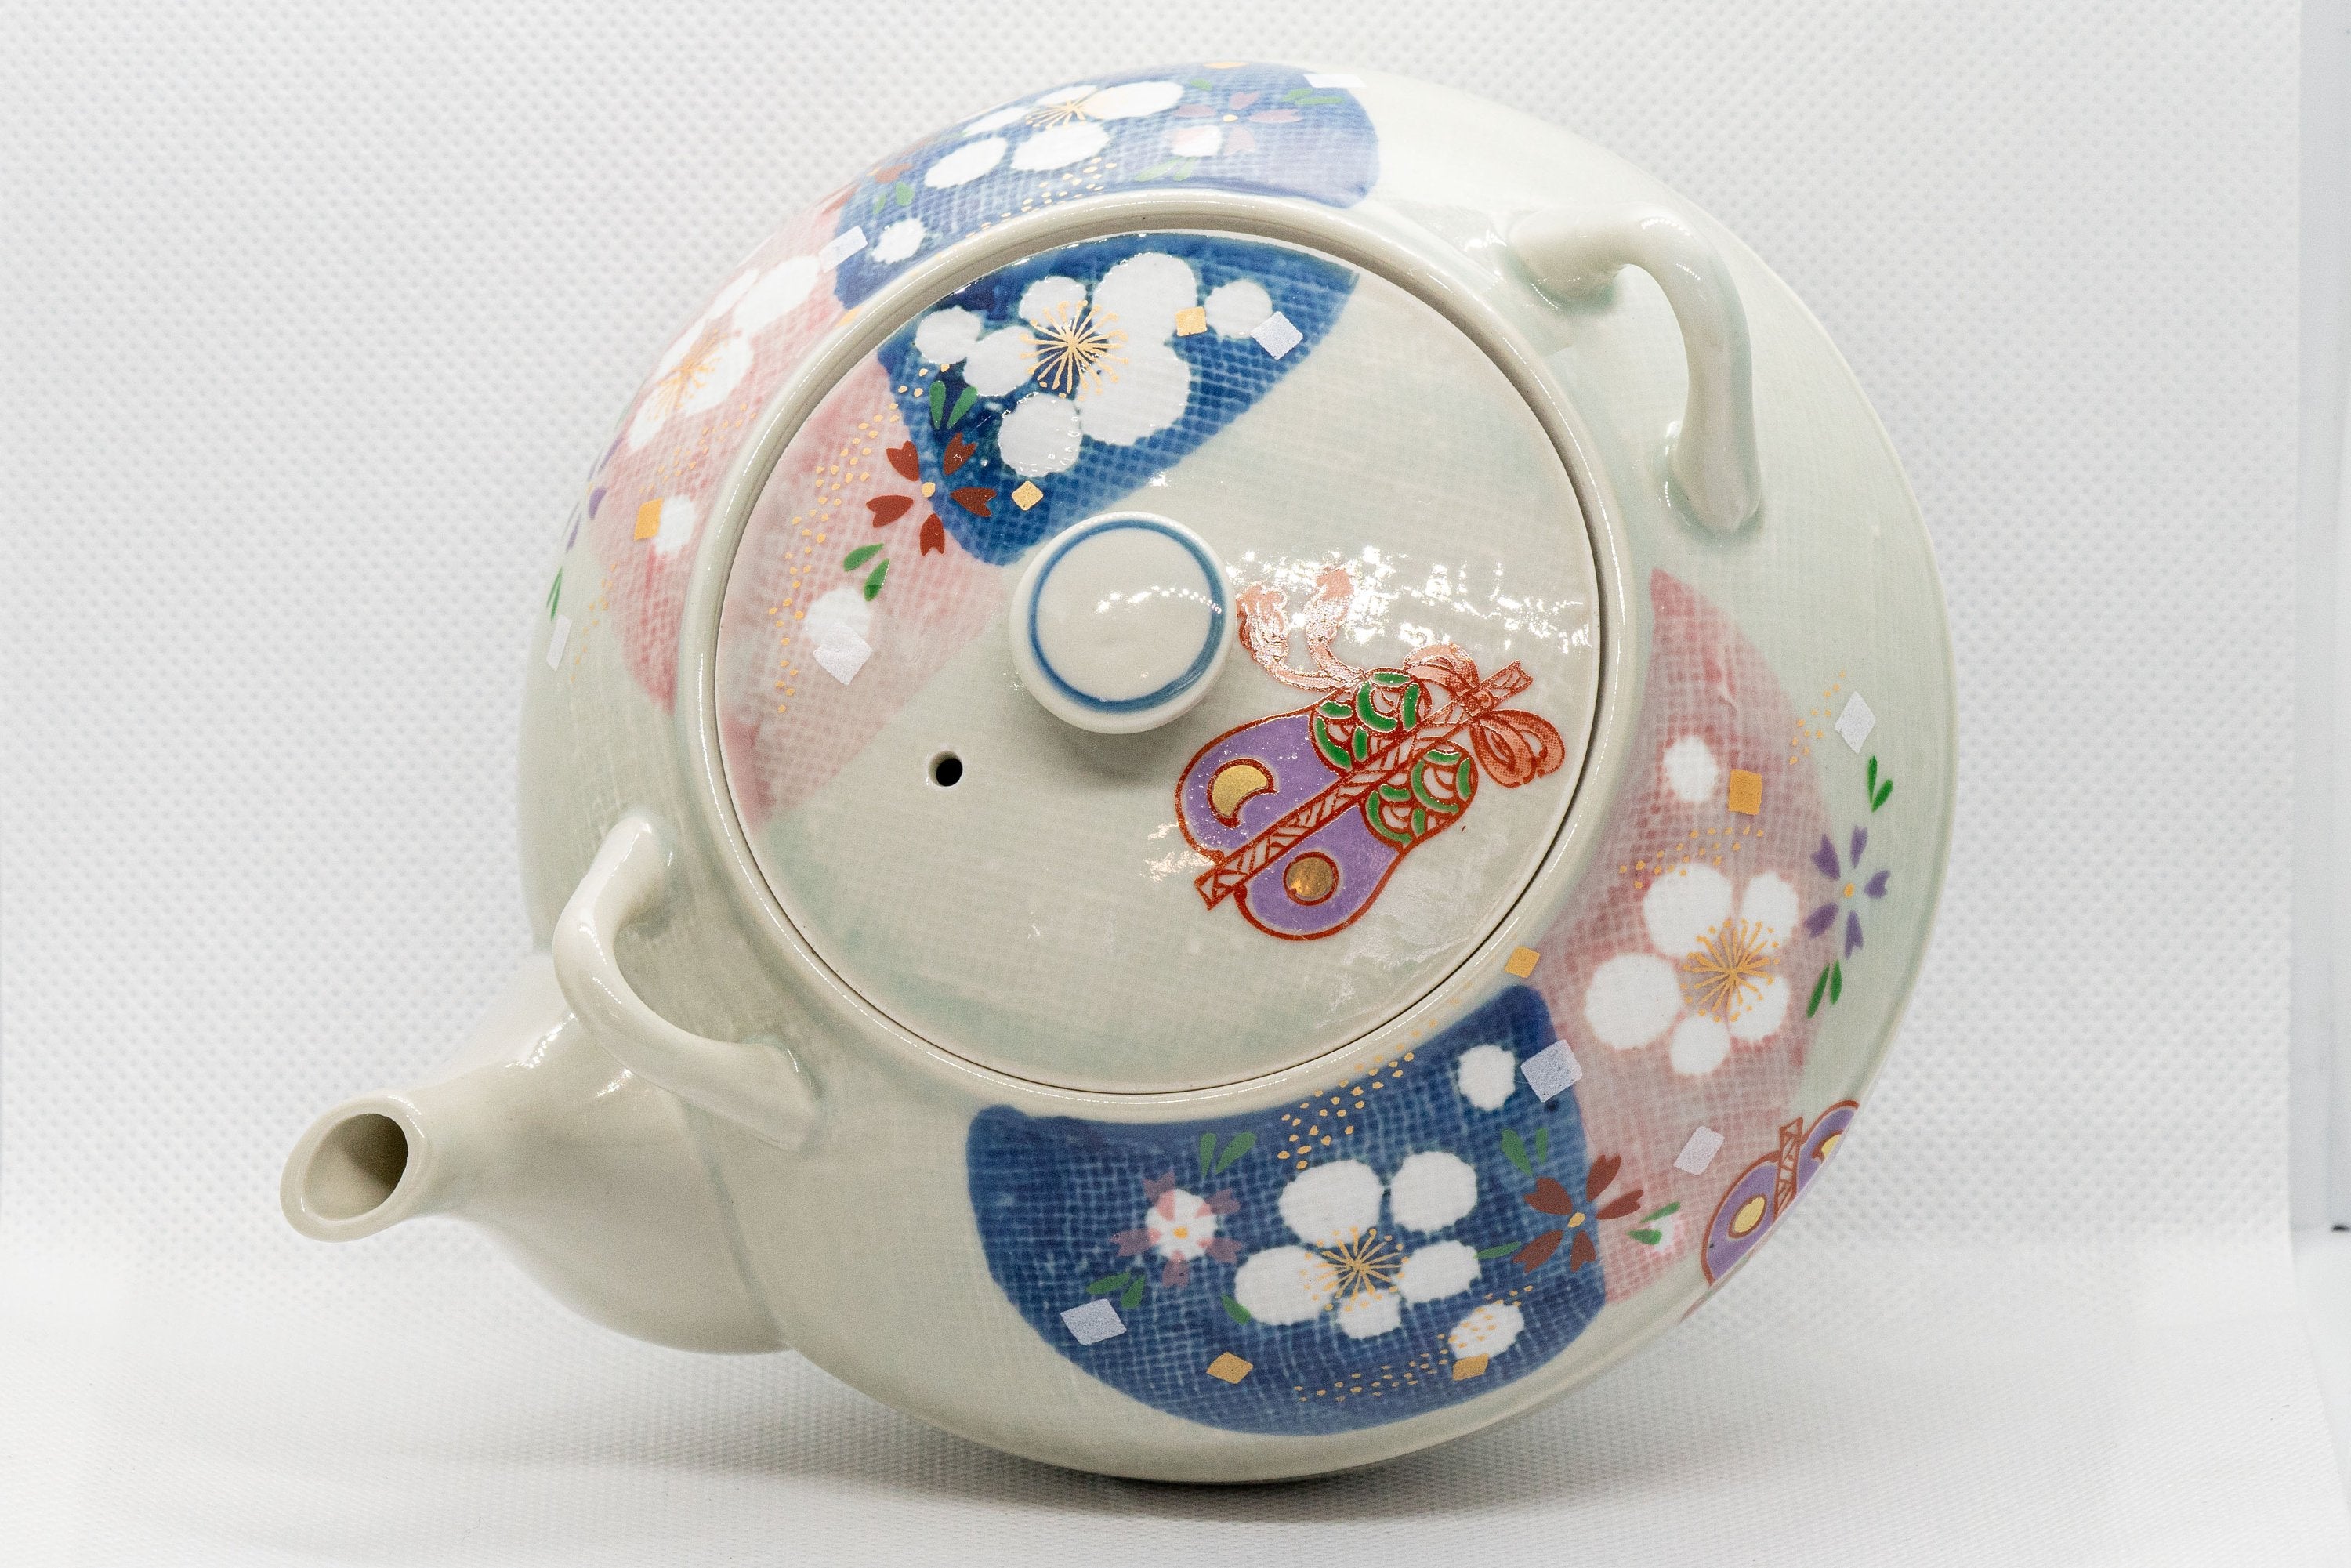 Japanese Dobin - Arita-yaki Teapot with Spring Flower Motifs - 630ml - Tezumi